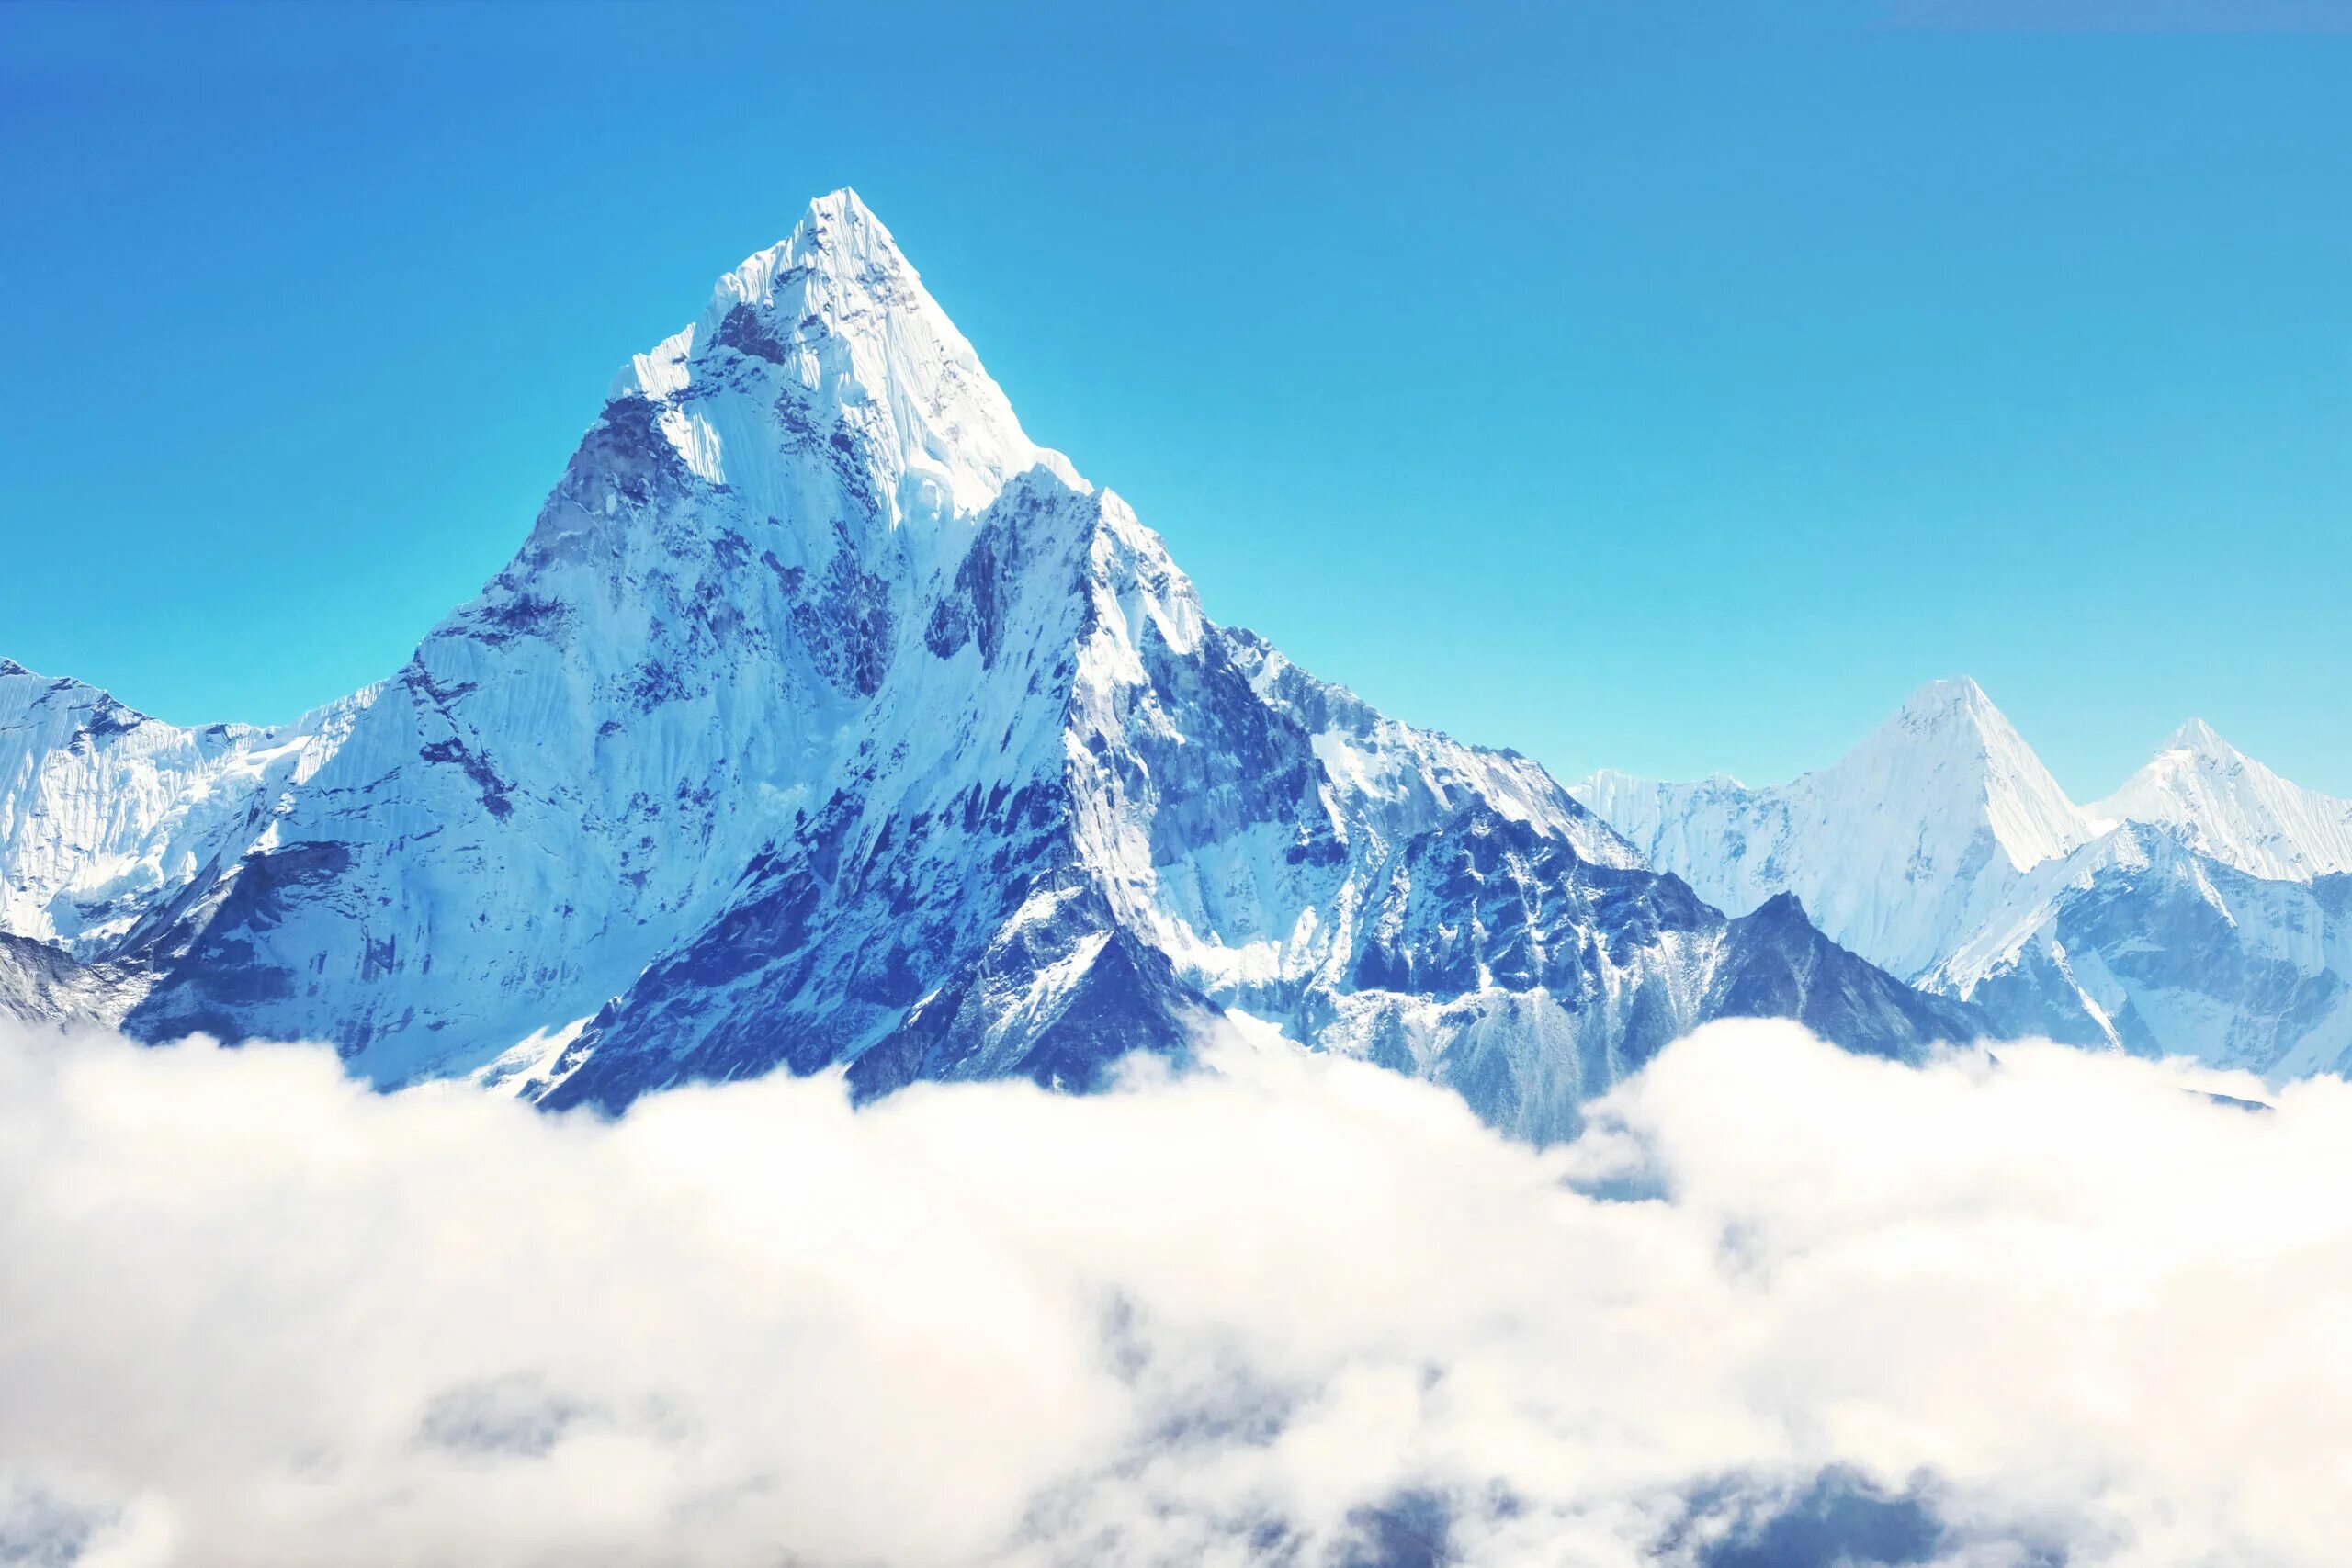 High mountains текст. Гора Эверест. Джомолунгма (Гималаи) - 8848. Эверест (Джомолунгма) высота (м): 8848,86. Гора Эверест вектор.